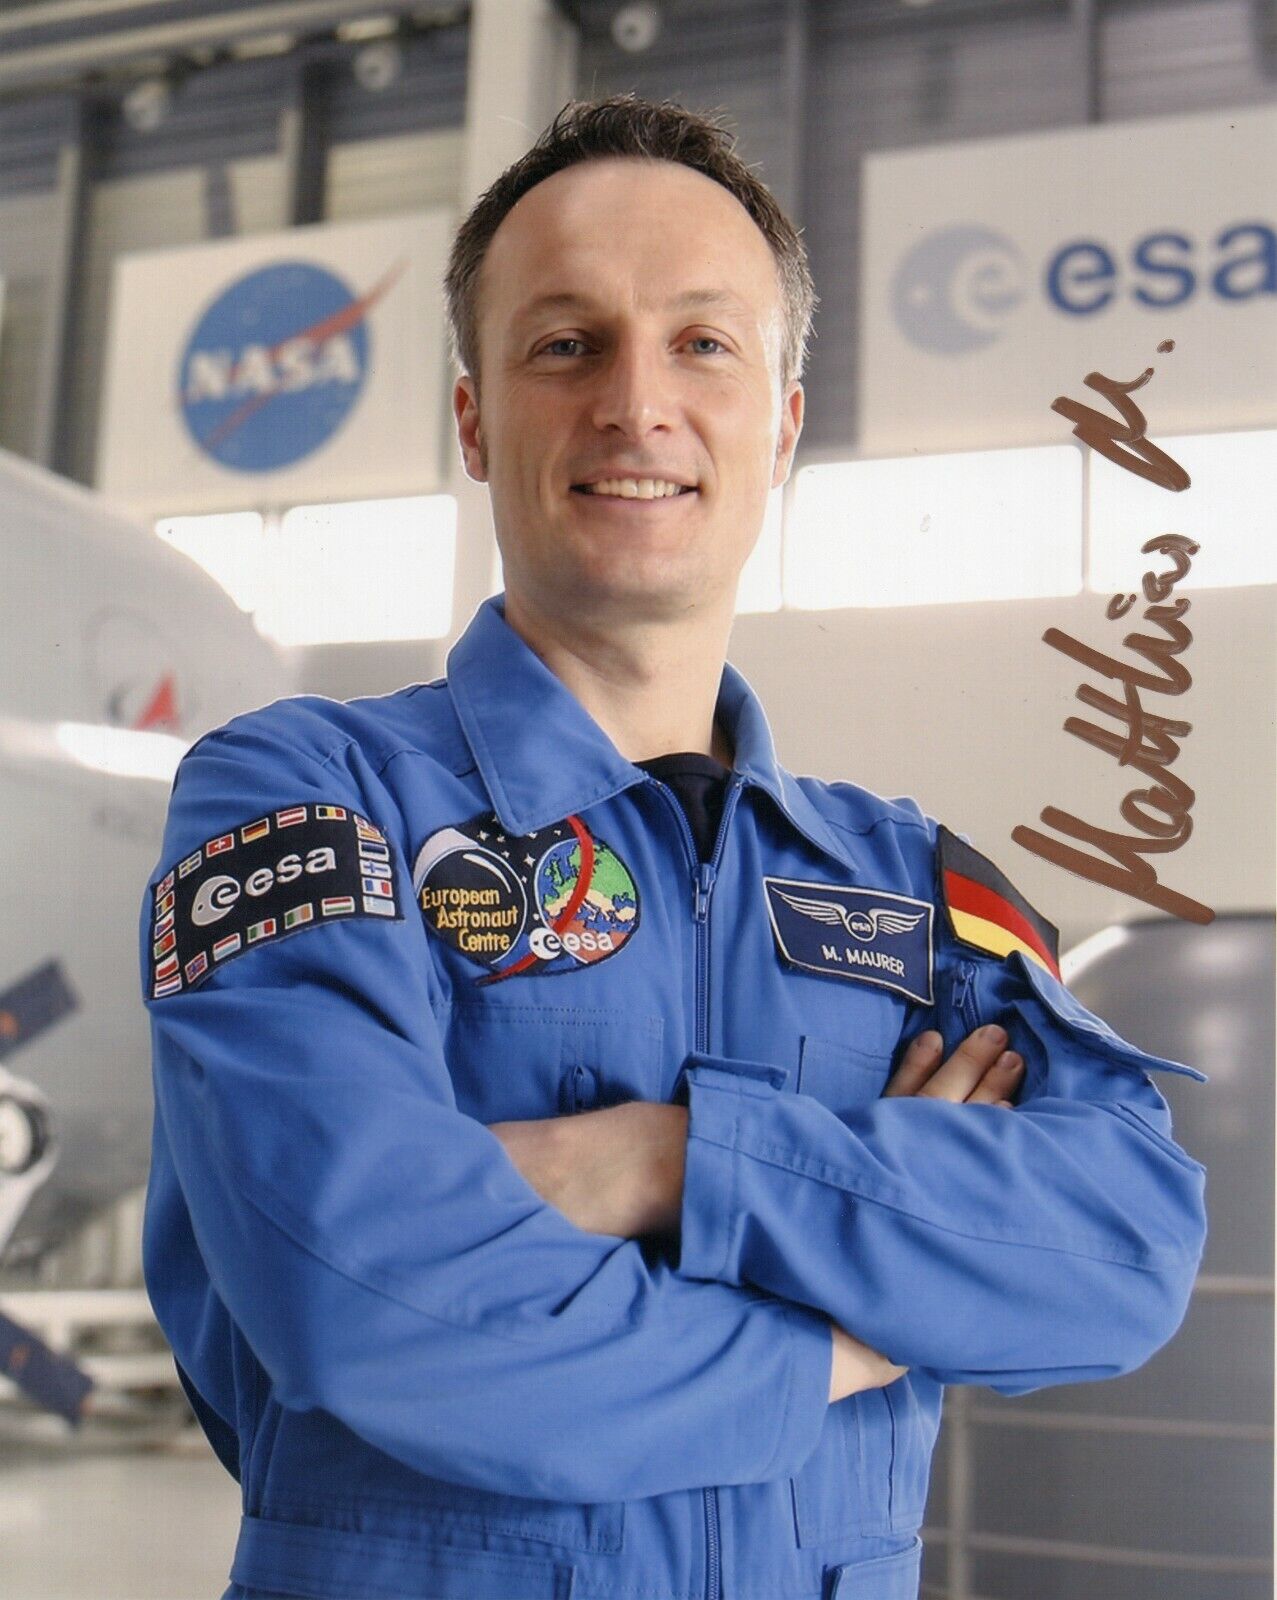 8x10 Original Autographed Photo of German Astronaut Matthias Maurer